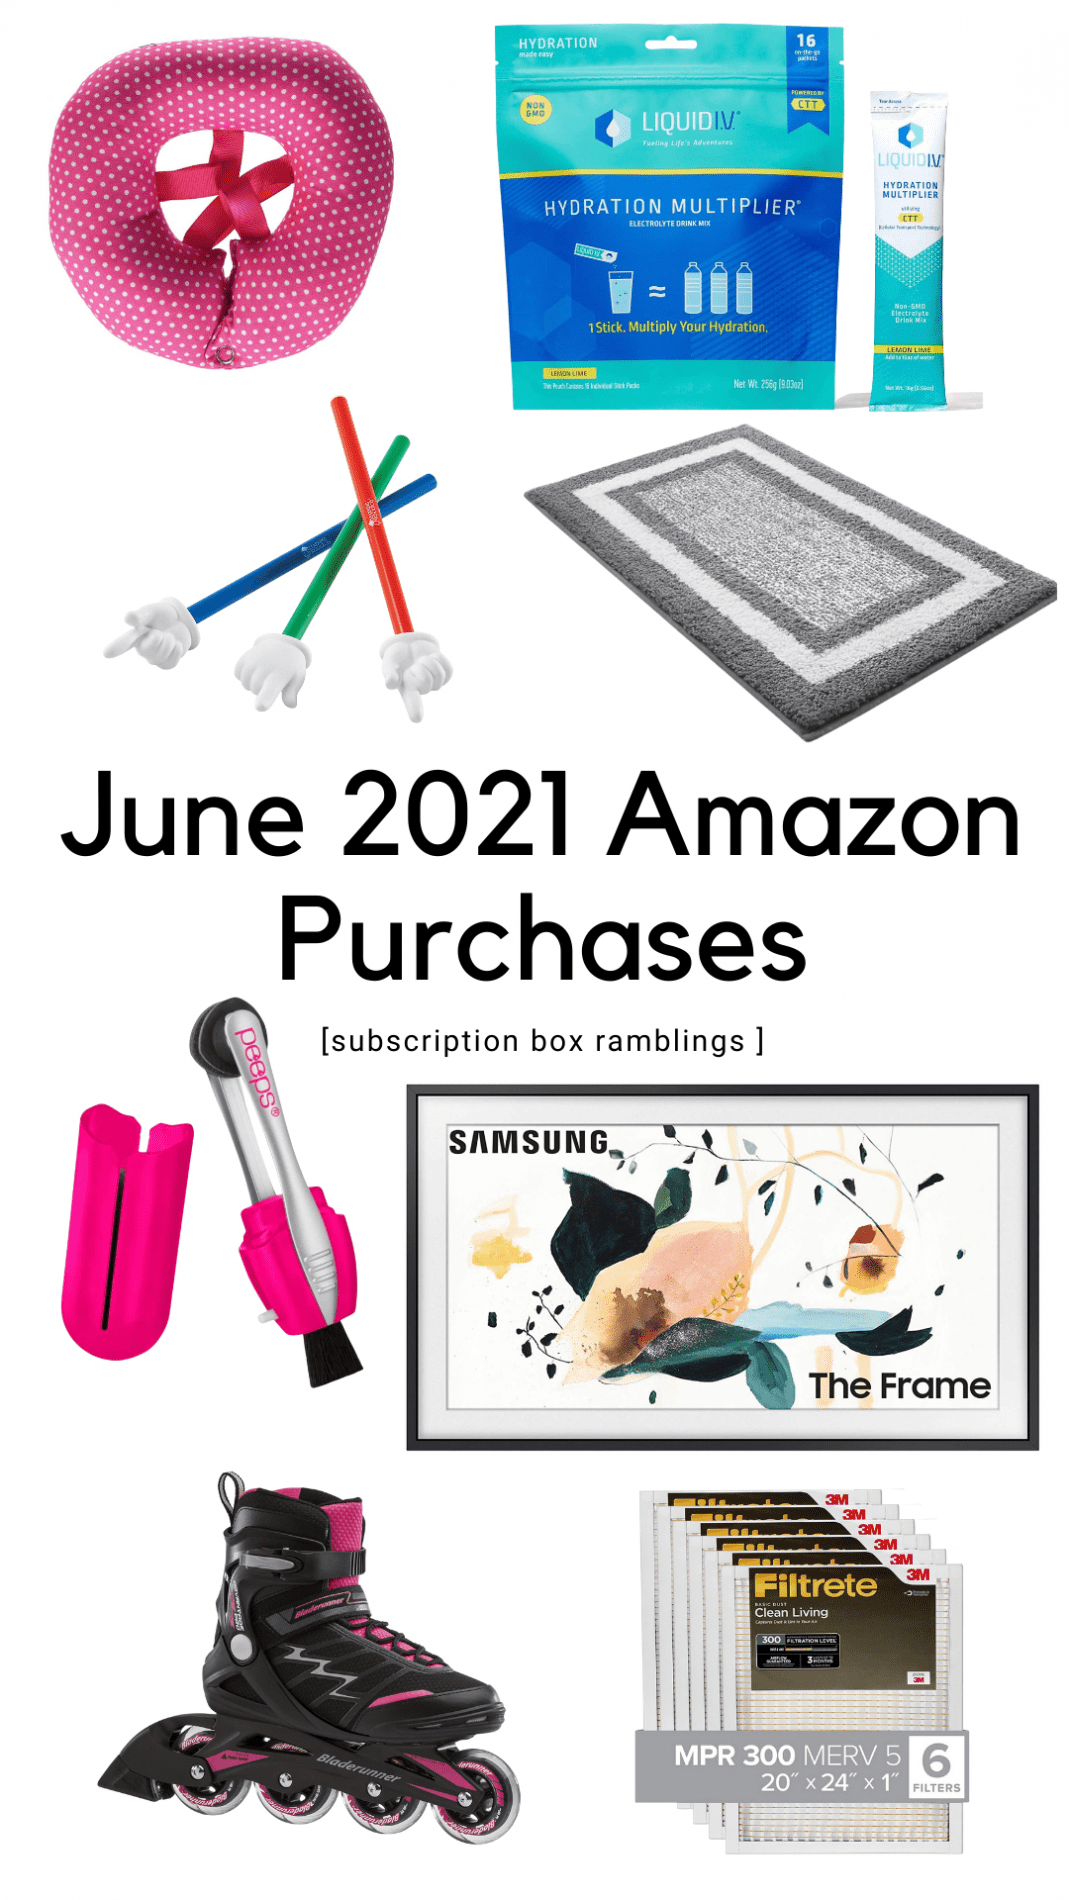 June 2021 Amazon Purchases